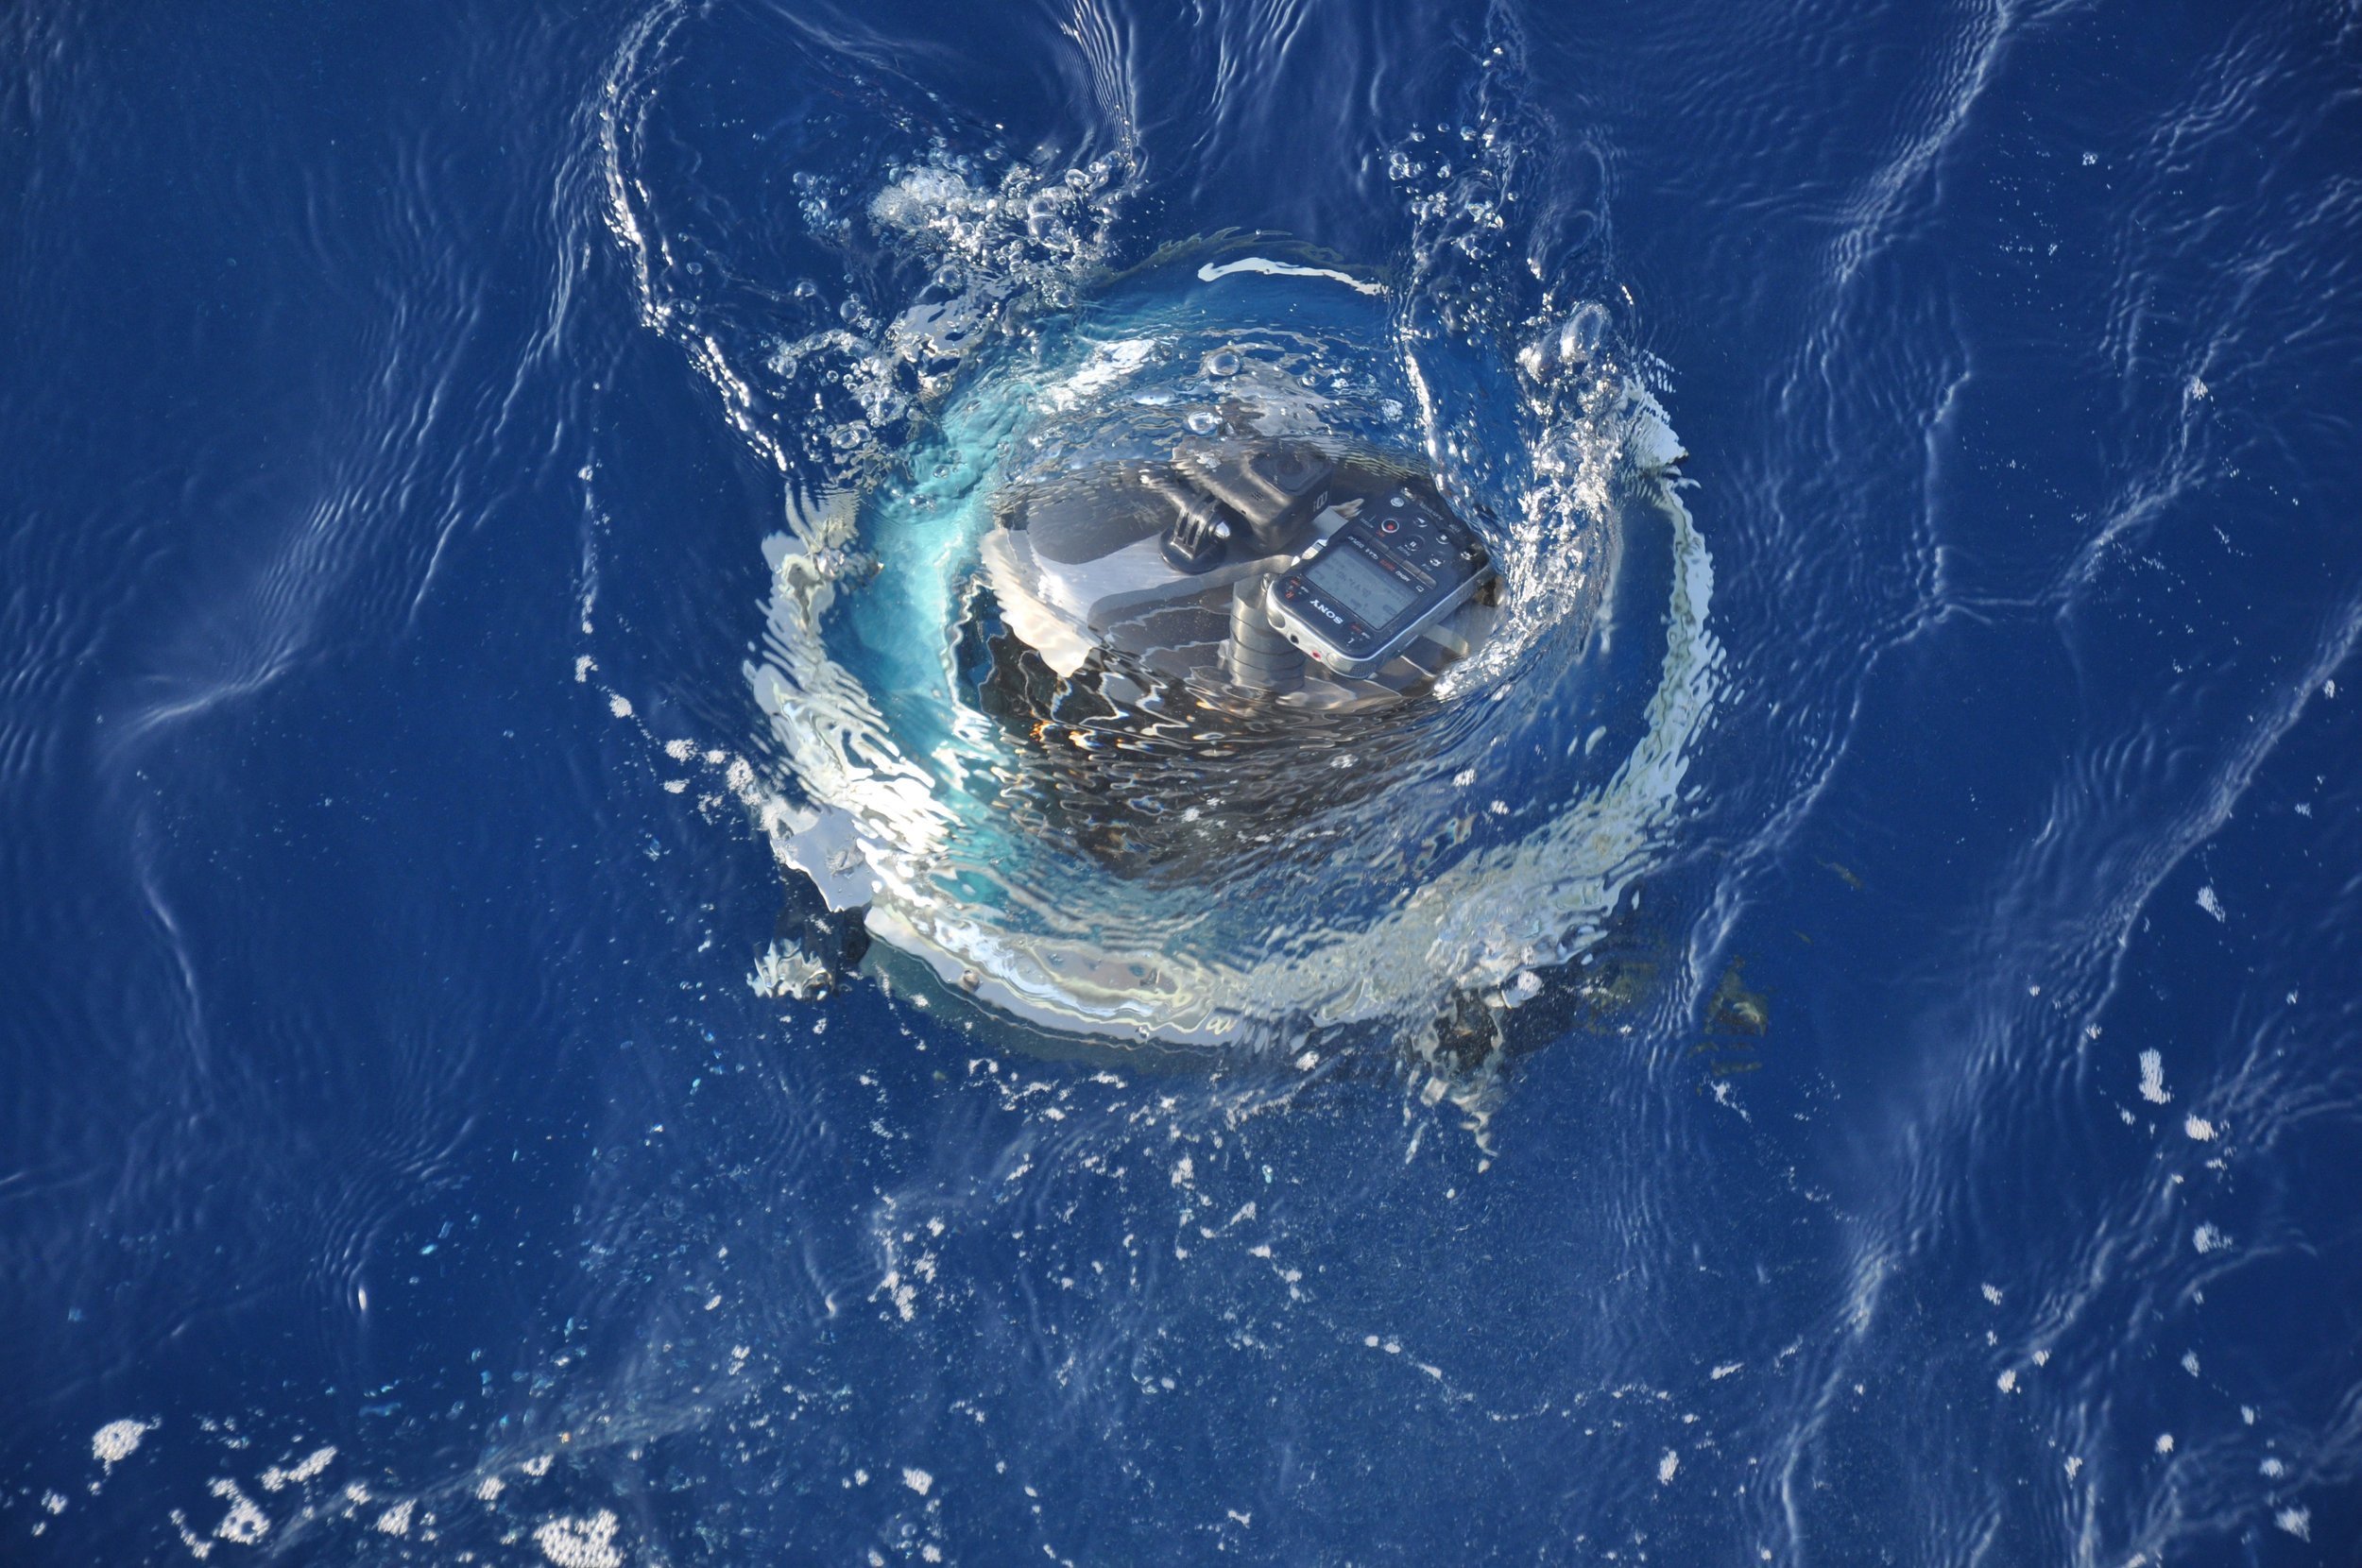 Bathysphere at surface in the Mediterranean Sea